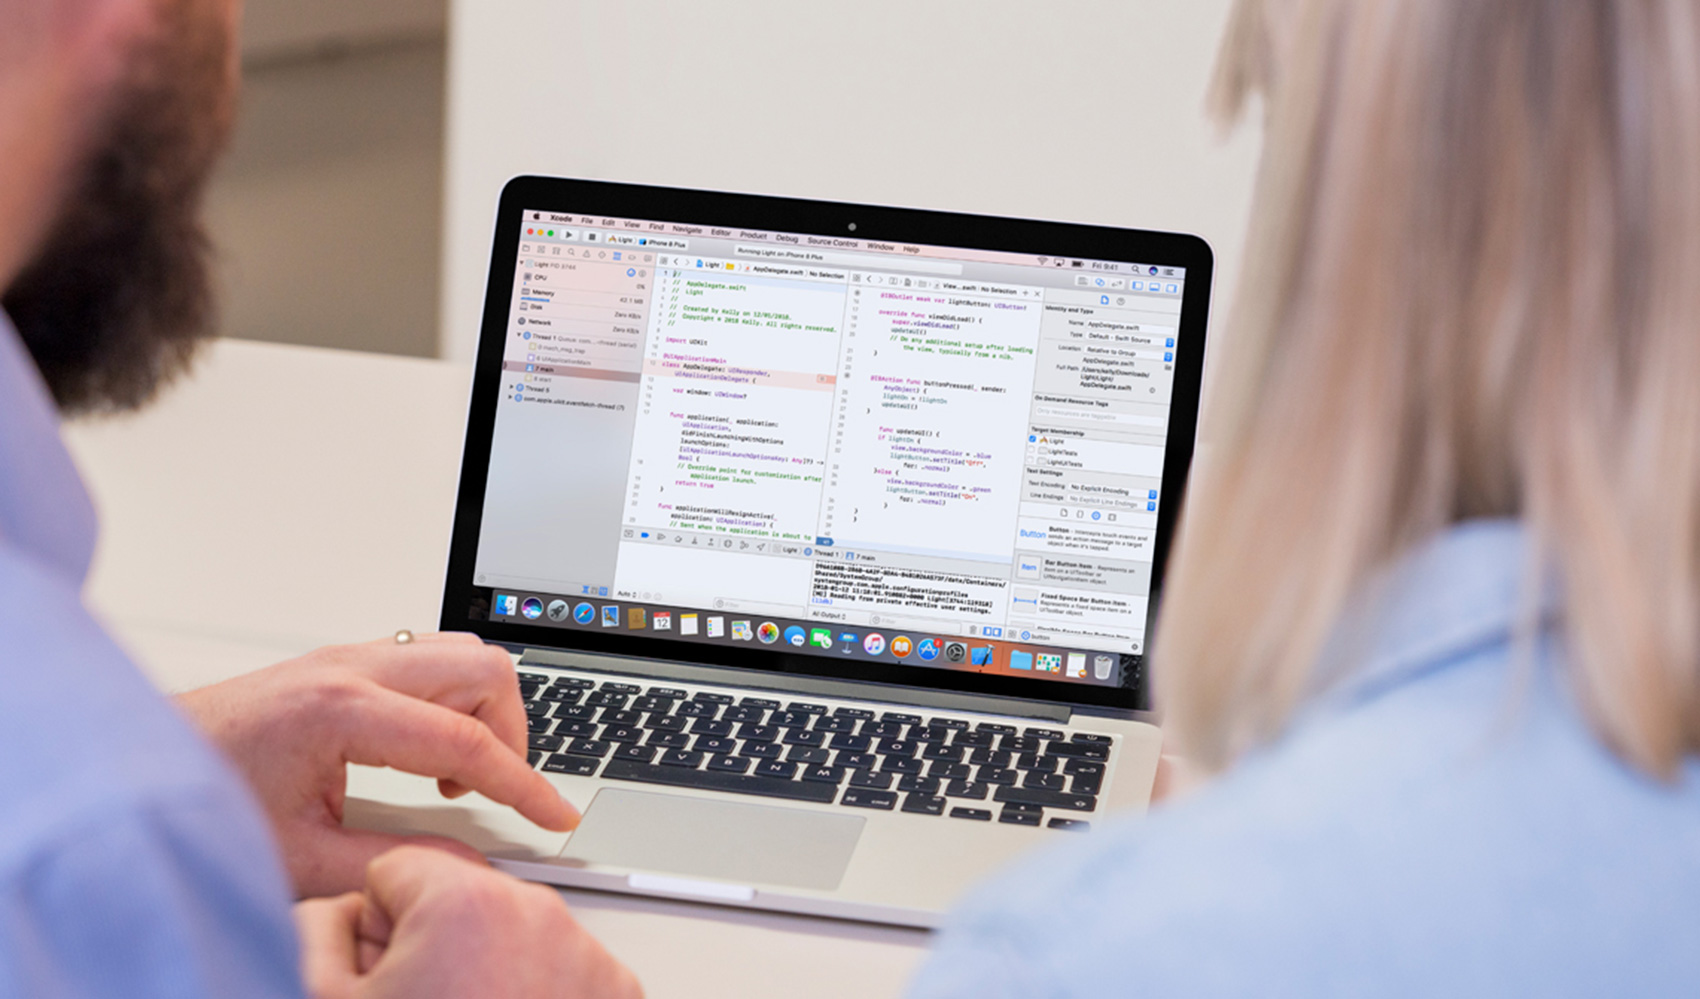 Centros educativos de toda Europa utilizan el plan de estudios 'Programacin para todos' de Apple para ensear a sus alumnos a programar...